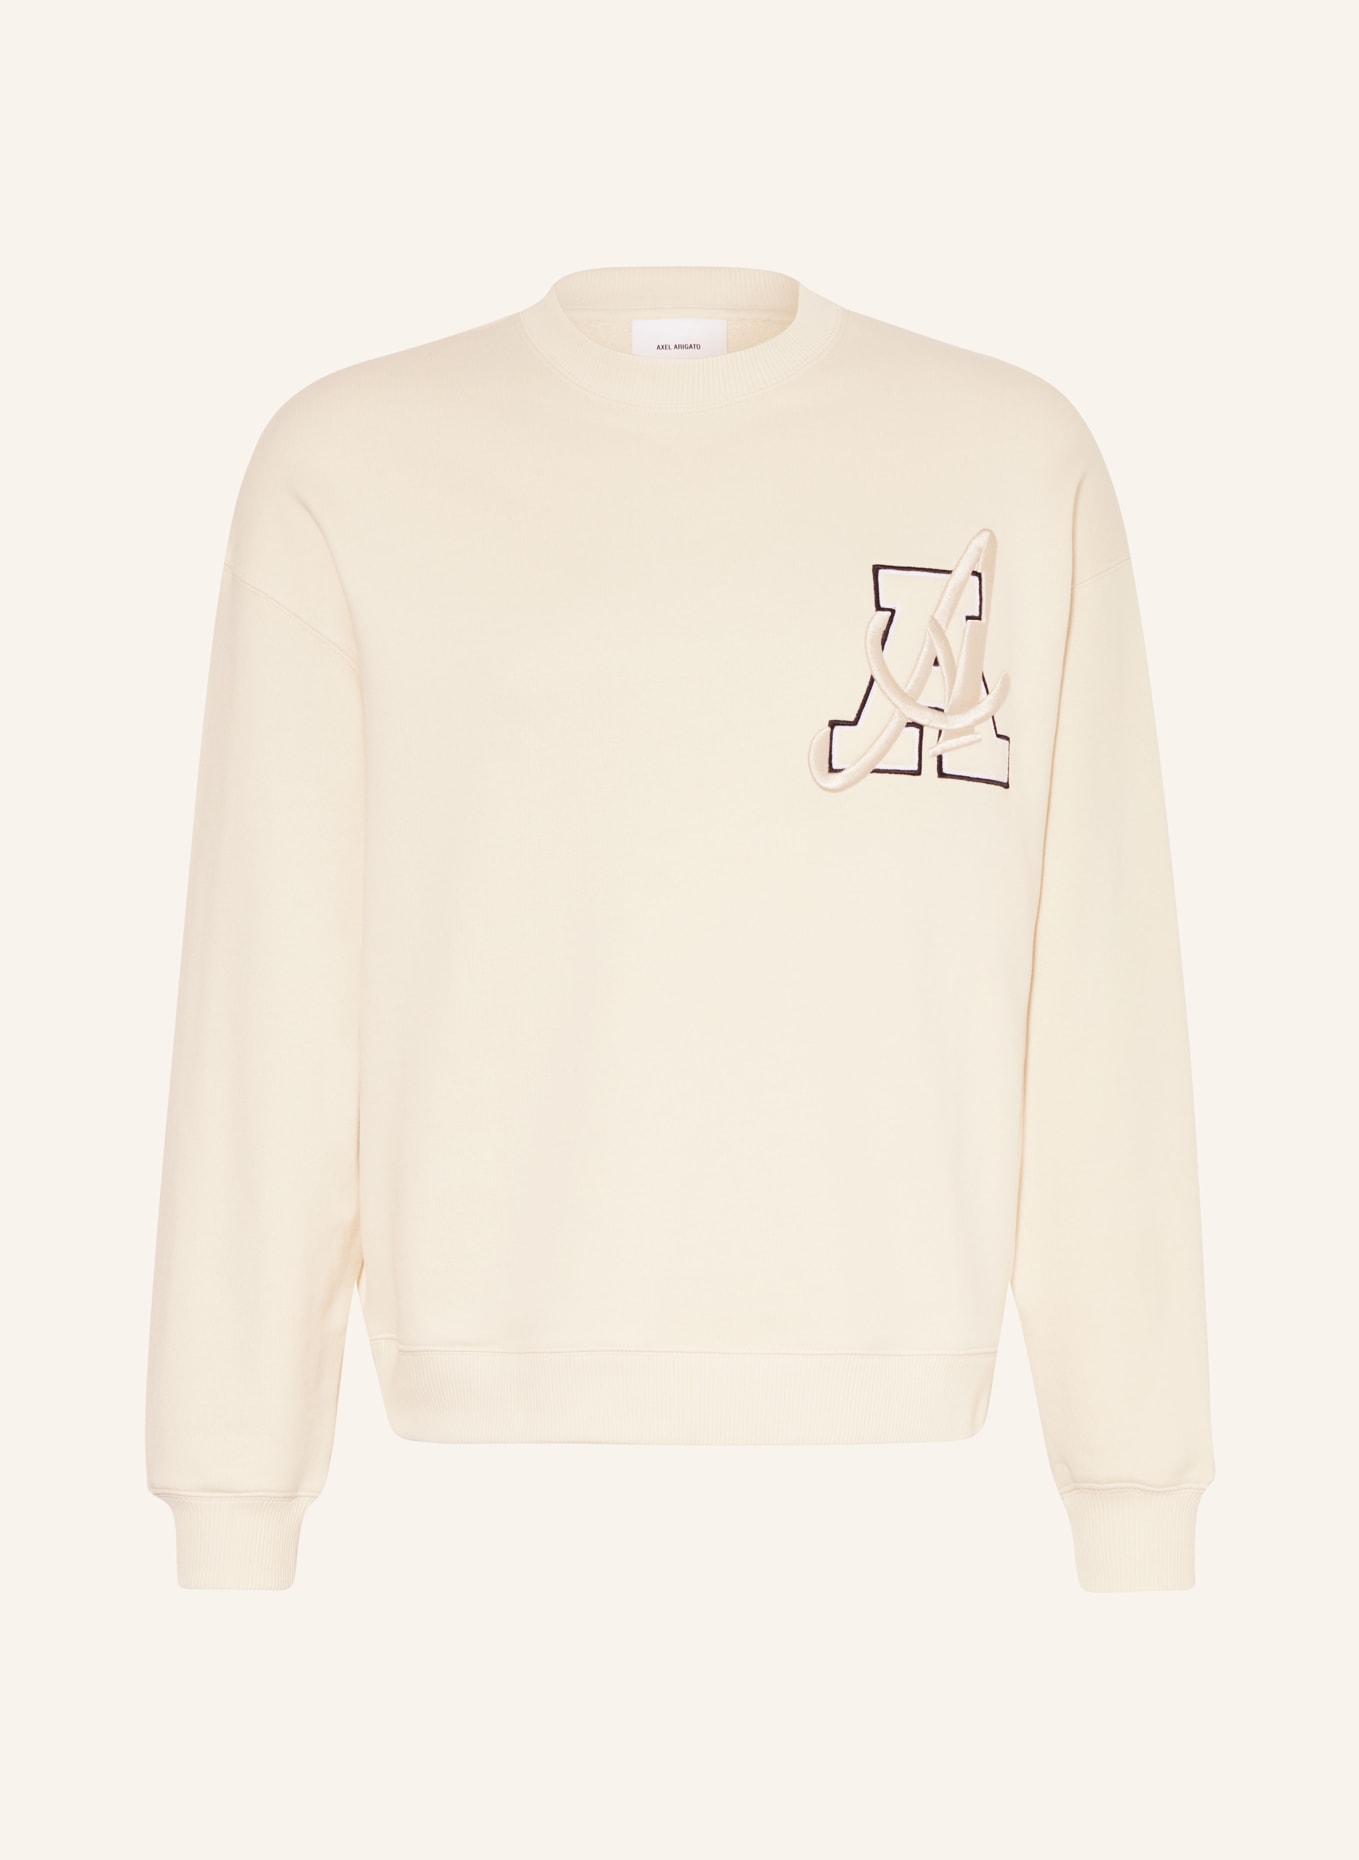 AXEL ARIGATO Sweatshirt HART, Farbe: CREME (Bild 1)